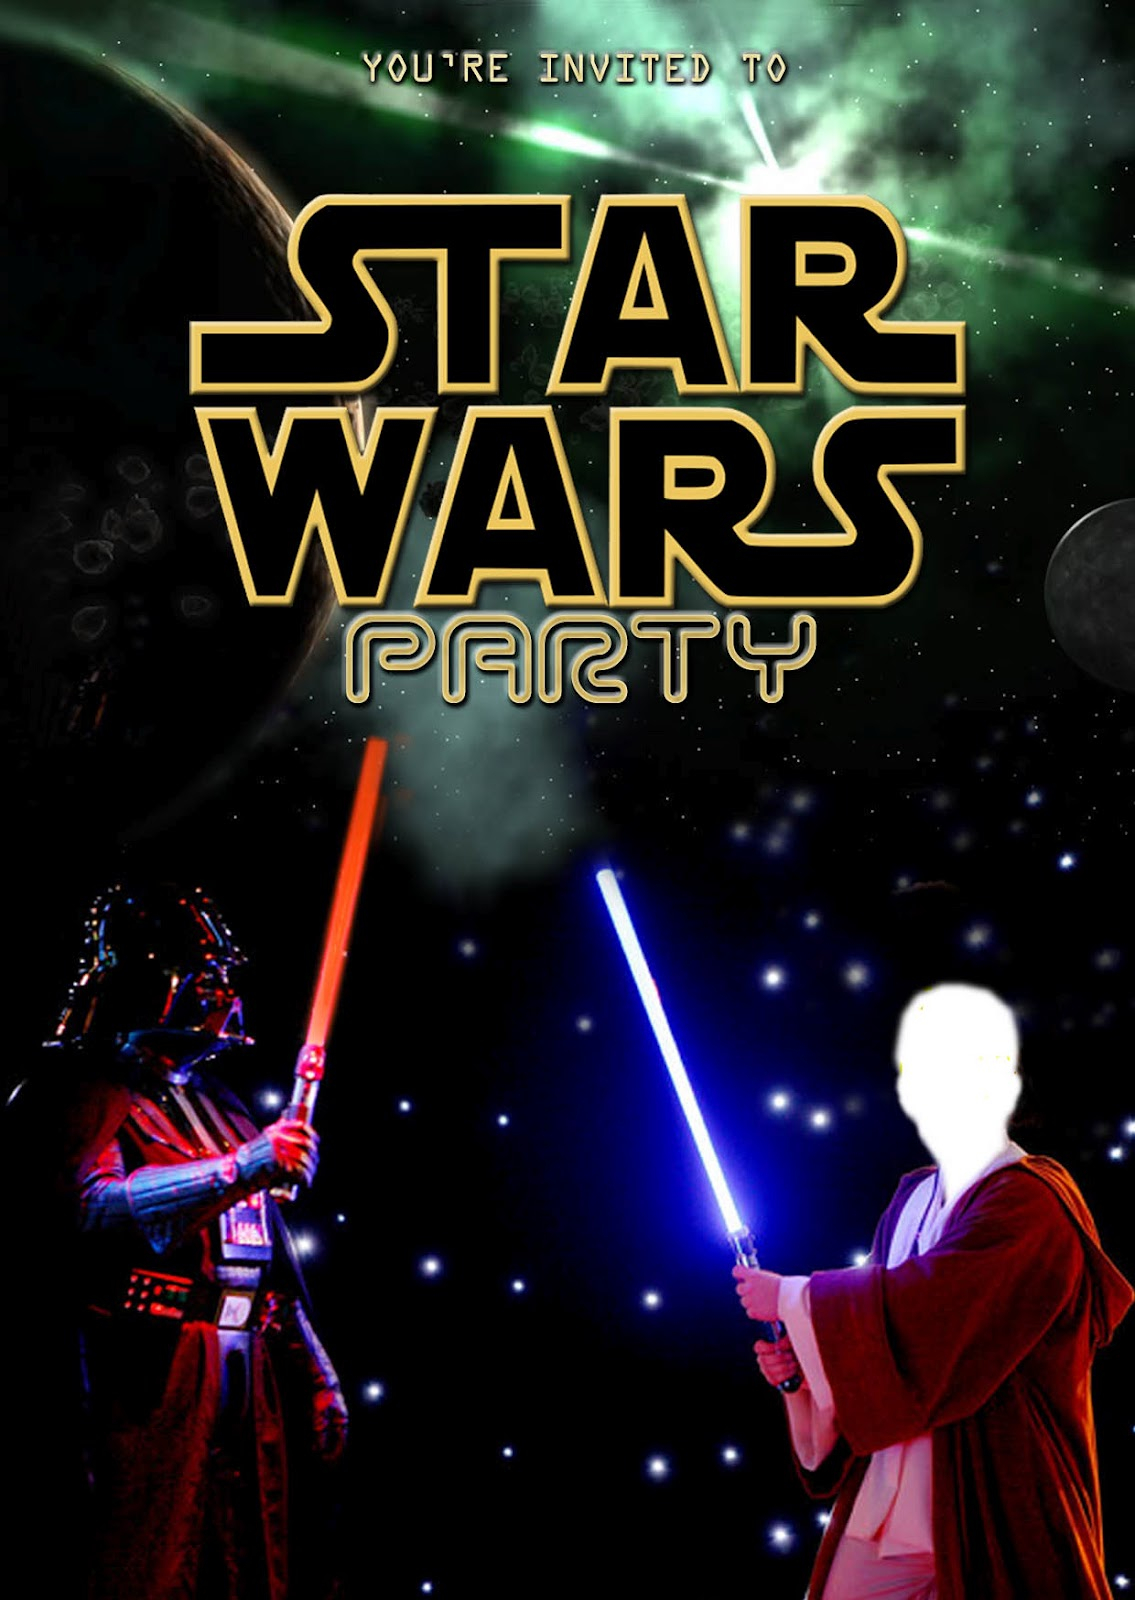 FREE Kids Party Invitations Star Wars Party Invitation self edit